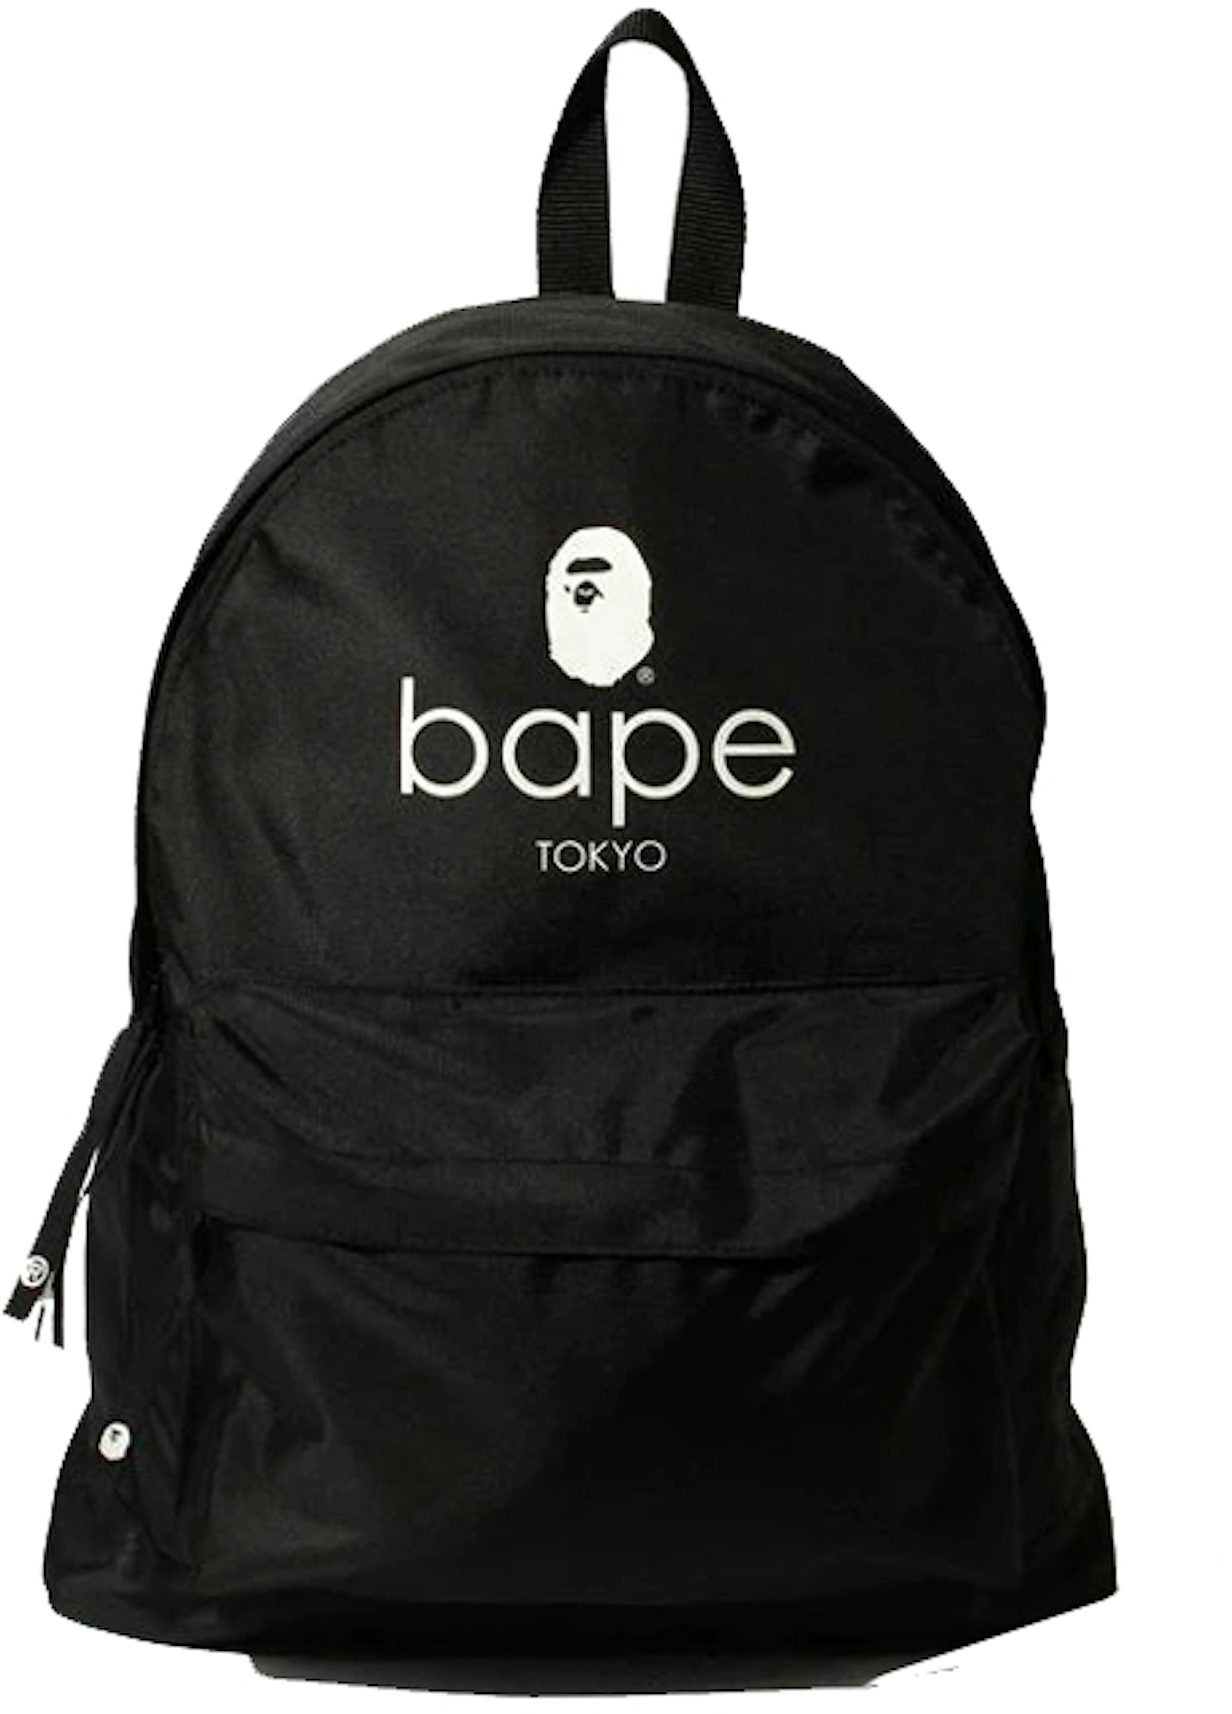 BAPE Laptop Case Sleeve iPad Tablet Cover A Bathing Ape Bapesta Black  SUPREME